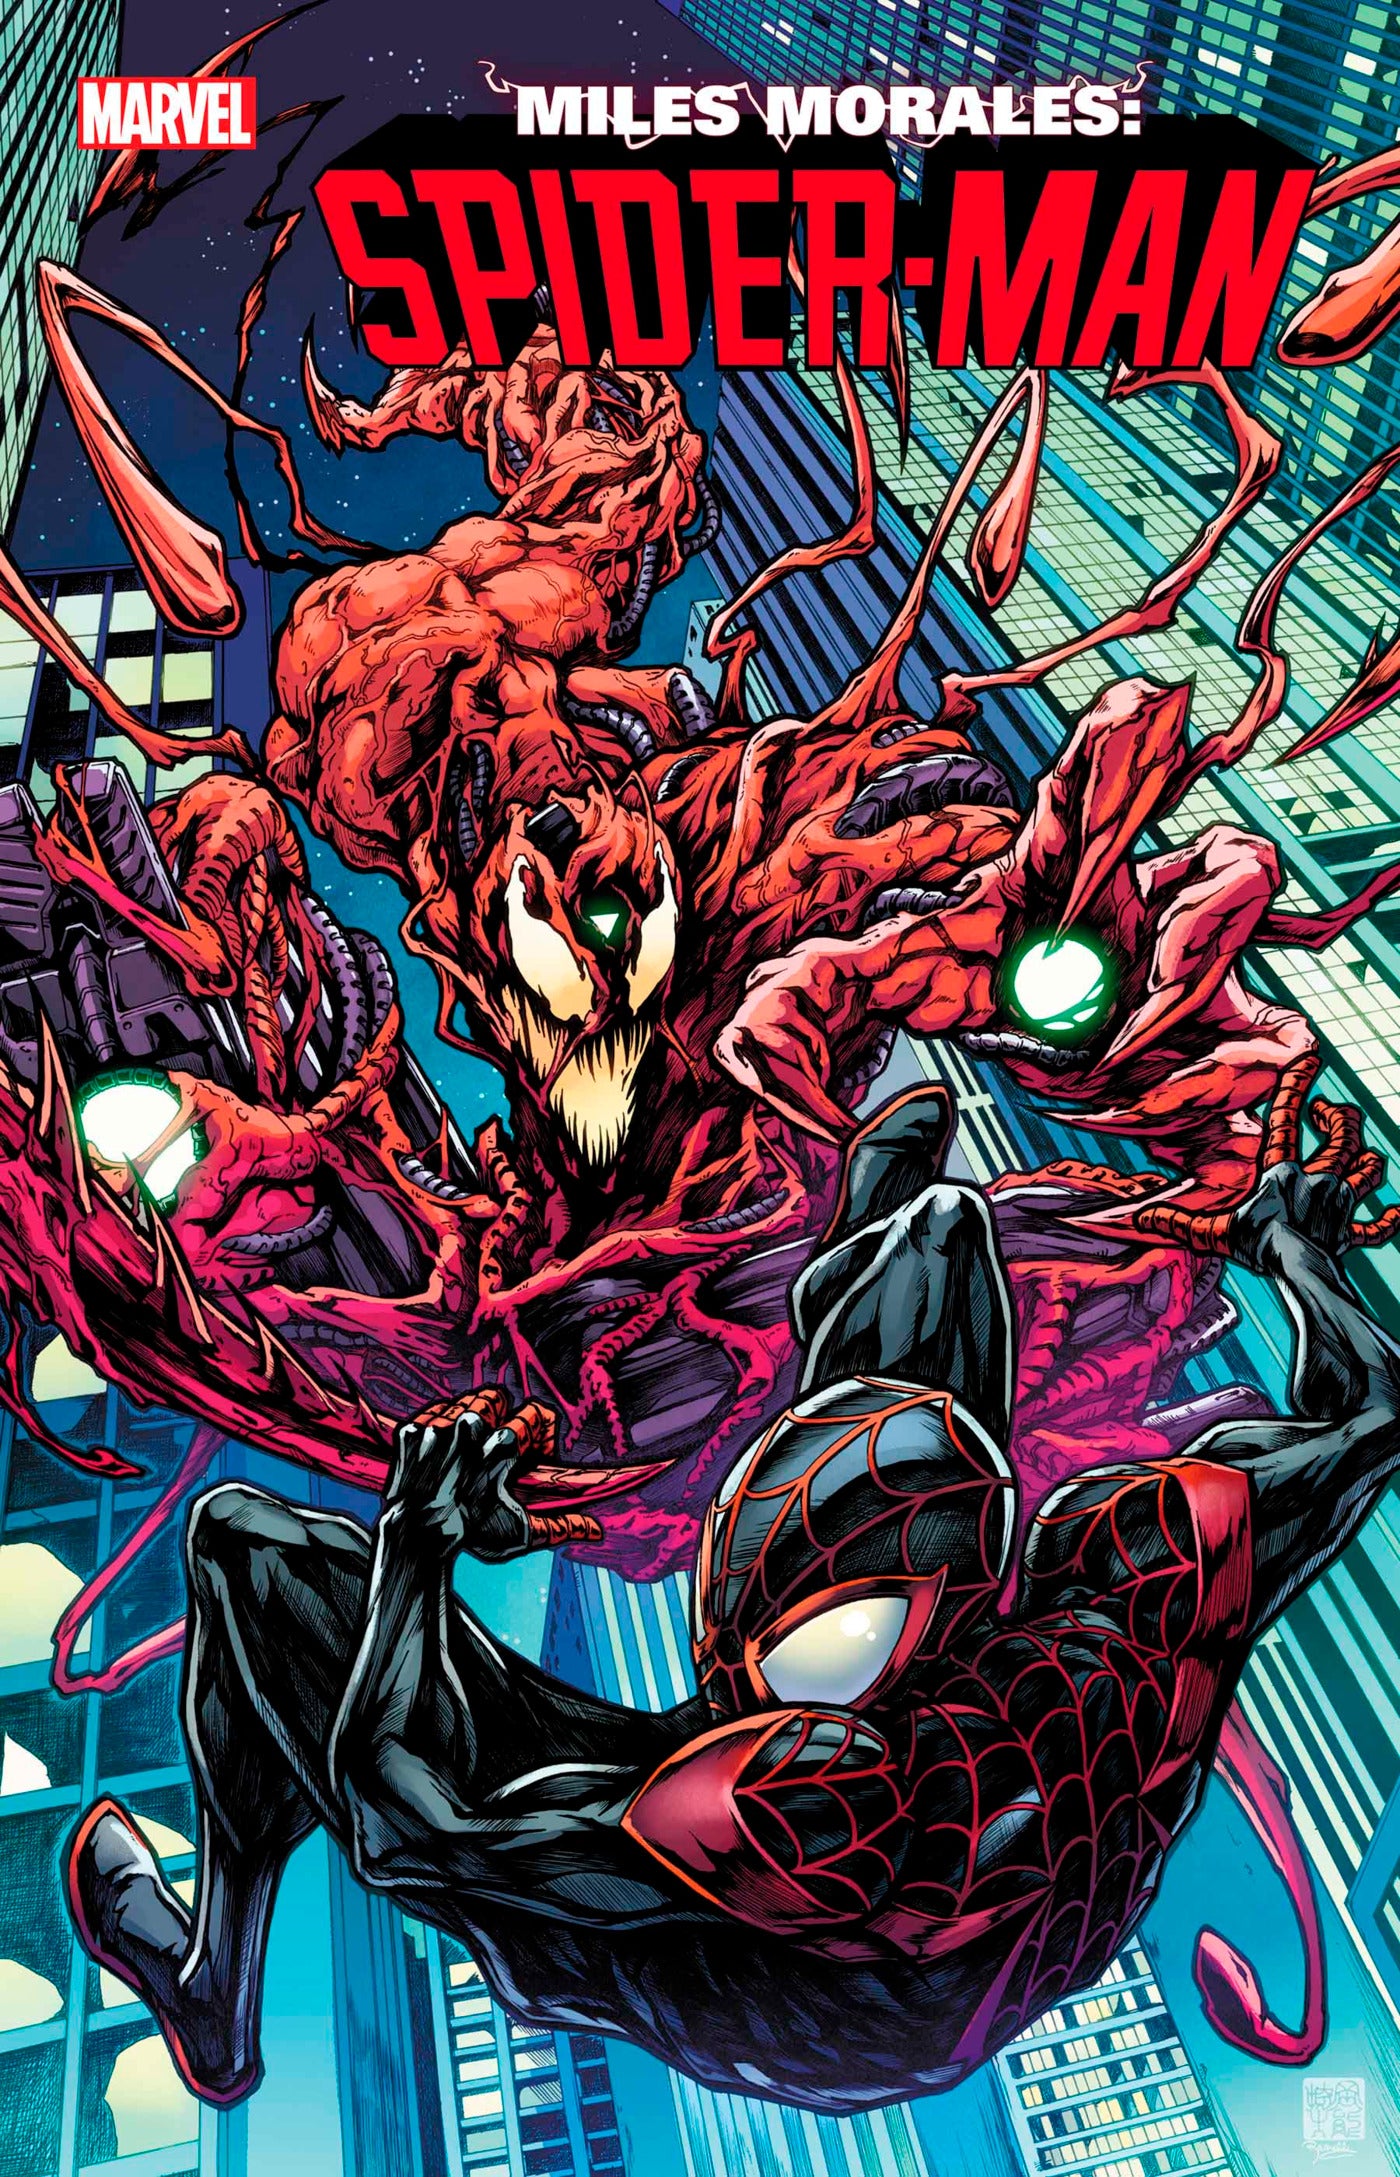 Spider-Man Miles Morales Chug Water Bottle - Red - 25 oz